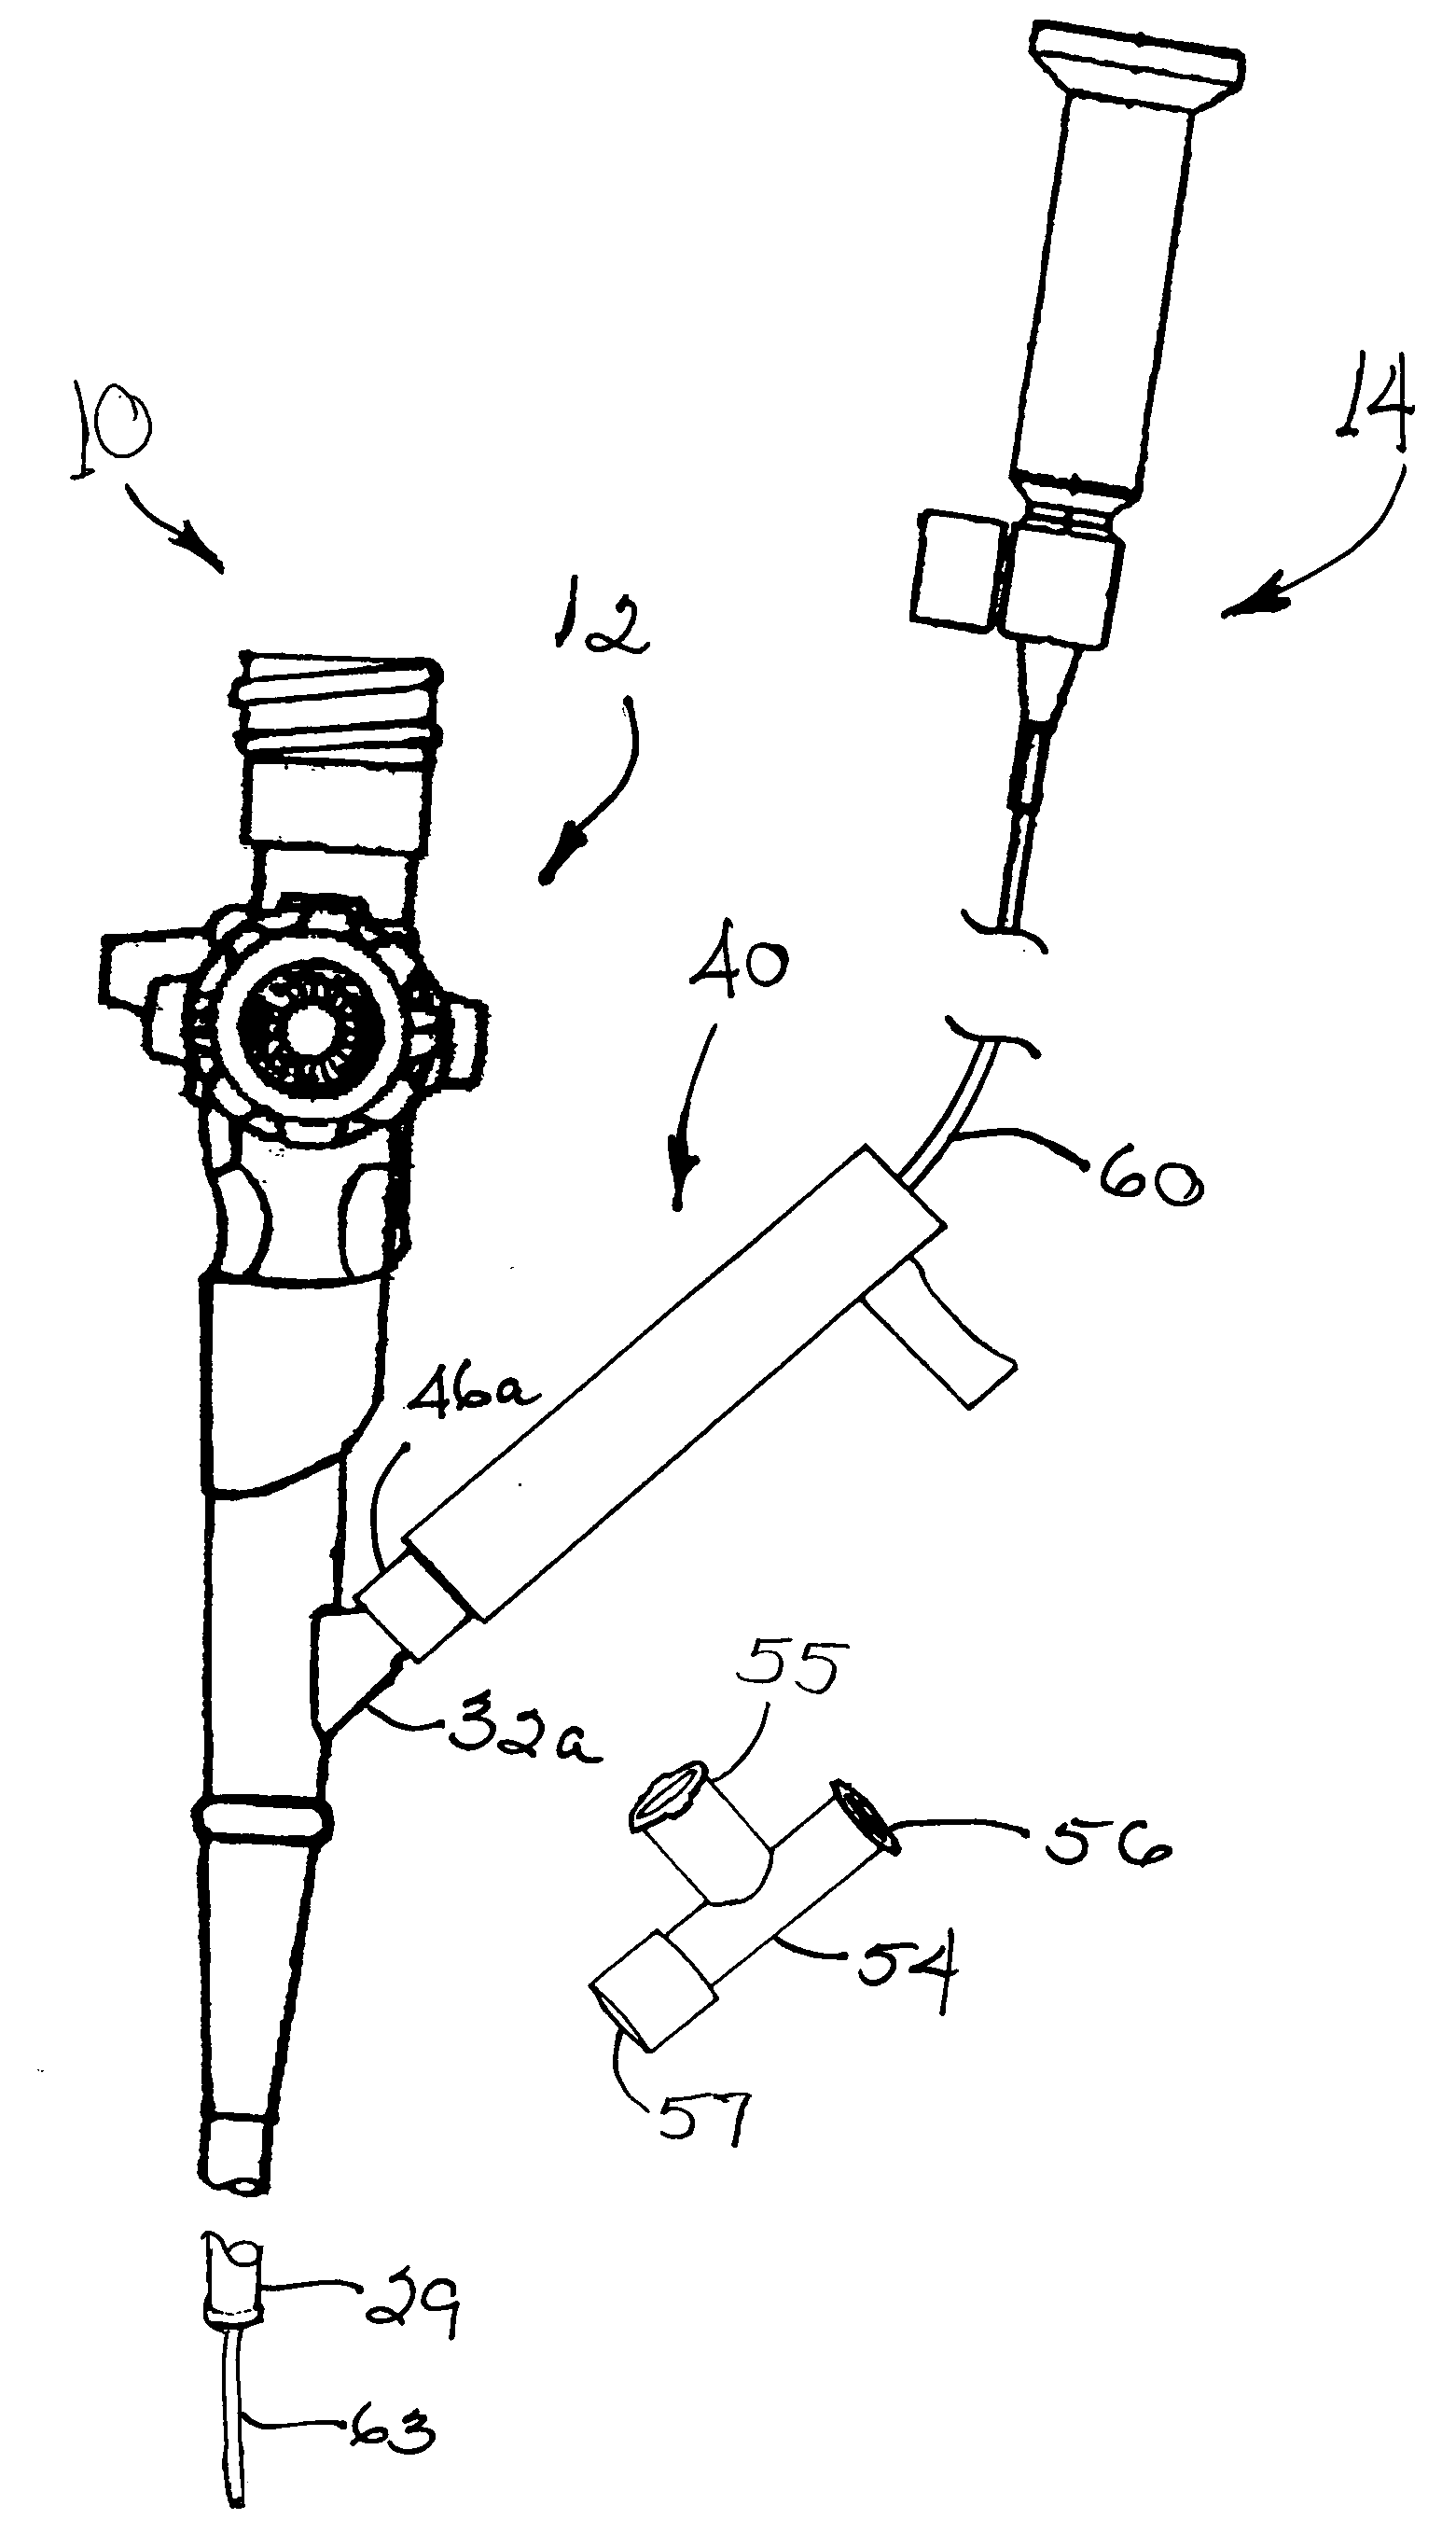 Dual-scope colonoscopy system with separate secondary colonoscope tool